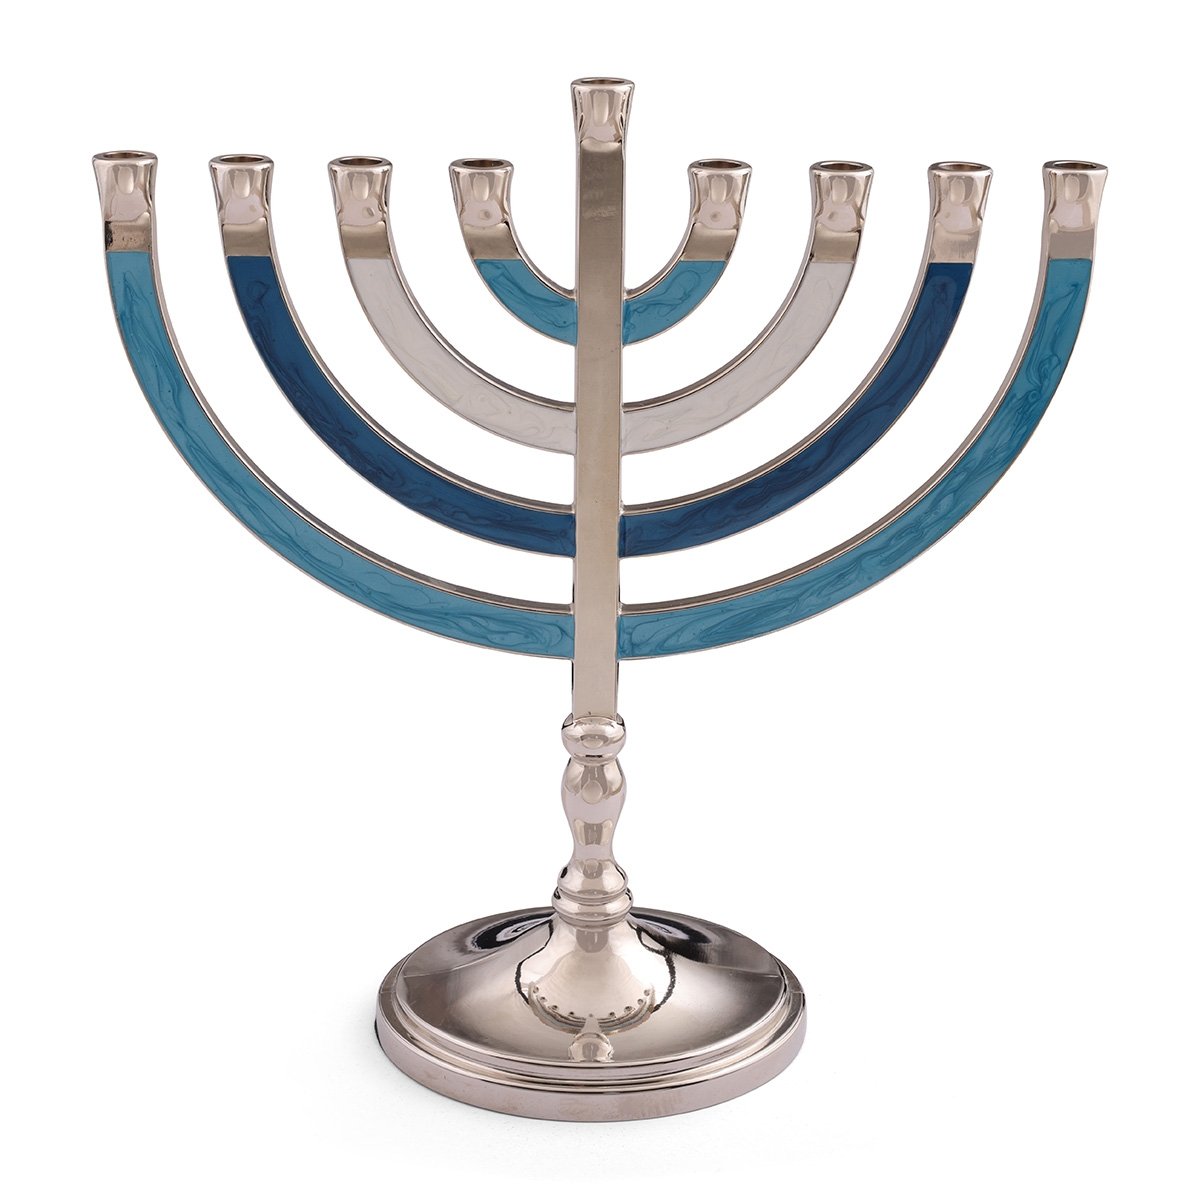 Our Top 10 Menorahs for Hanukkah 2023